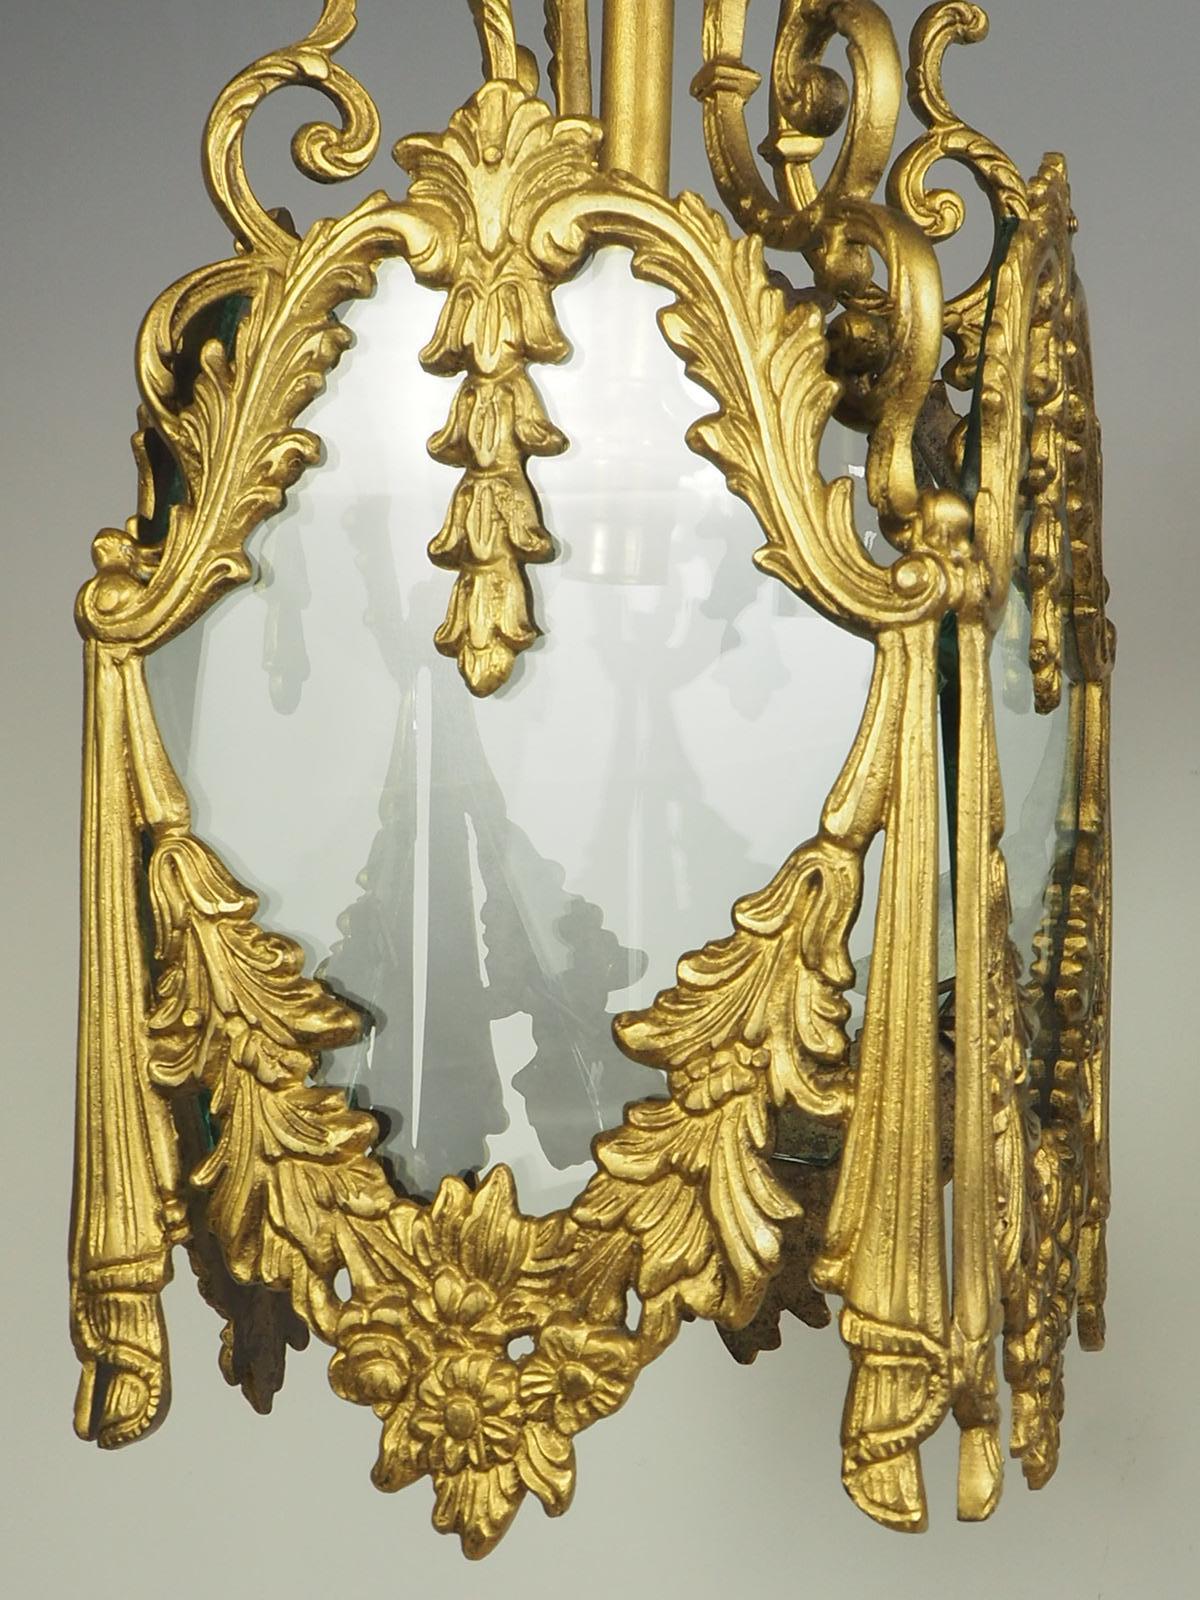 Rococo Revival Pair of Decorative French Rococo Gilt Brass Lanterns